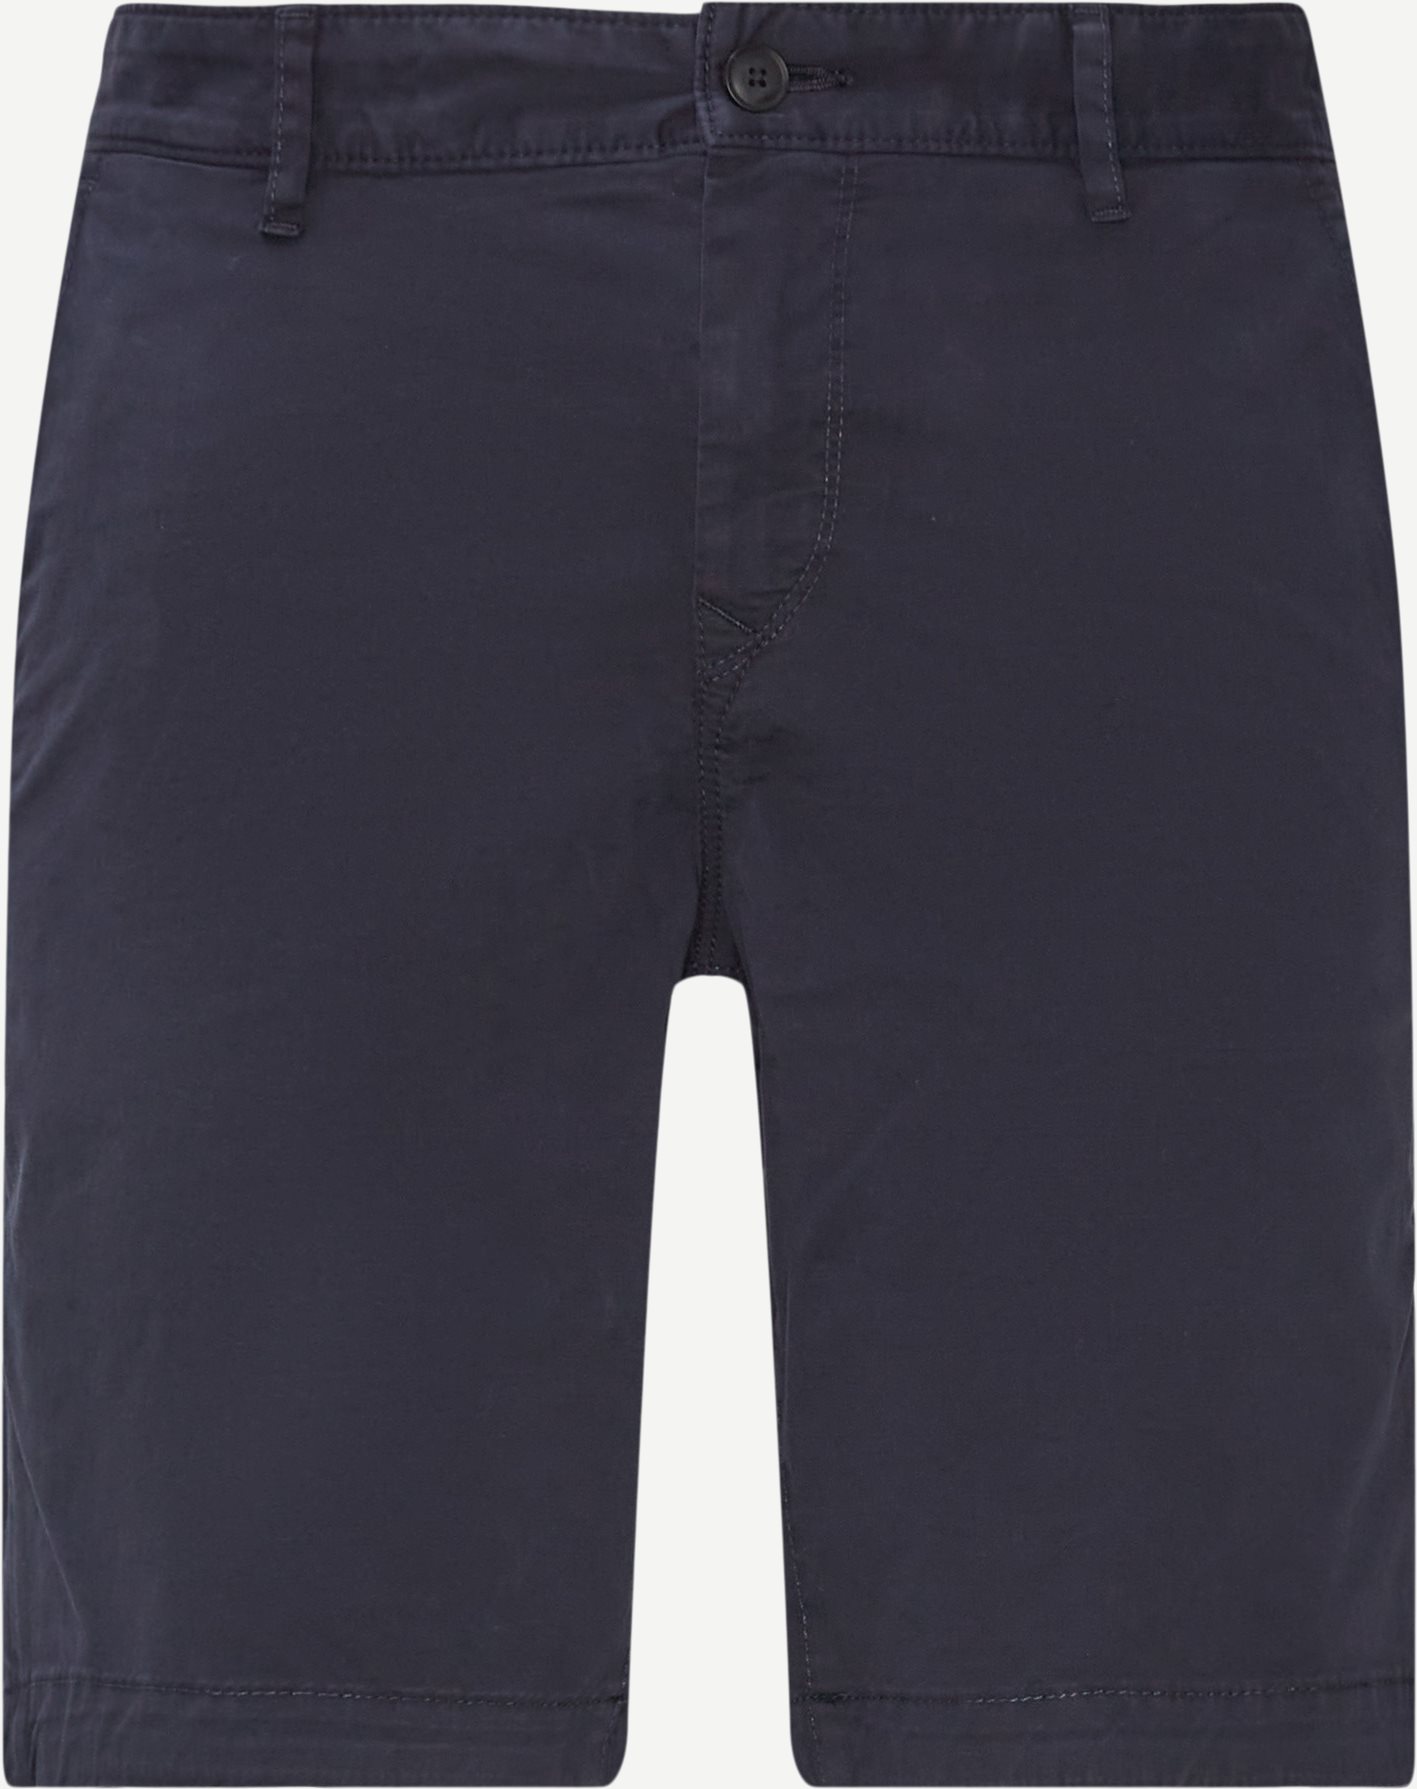 Schino Shorts - Shorts - Slim fit - Blå